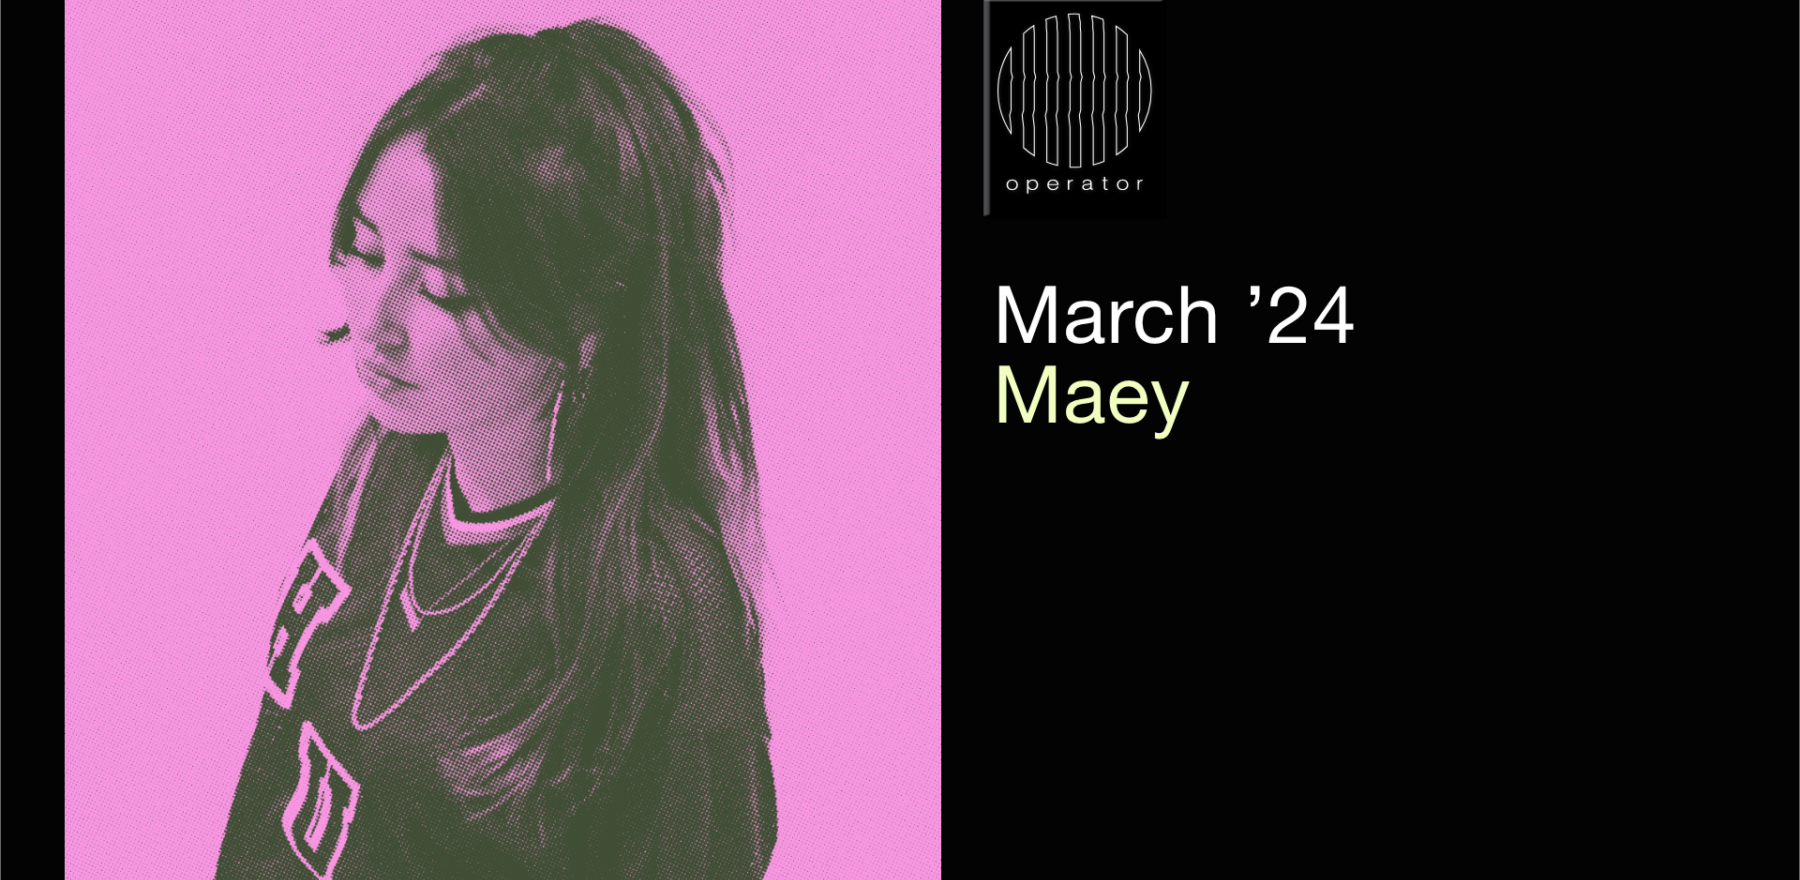 Playlist march '24 - Operator invites Maey